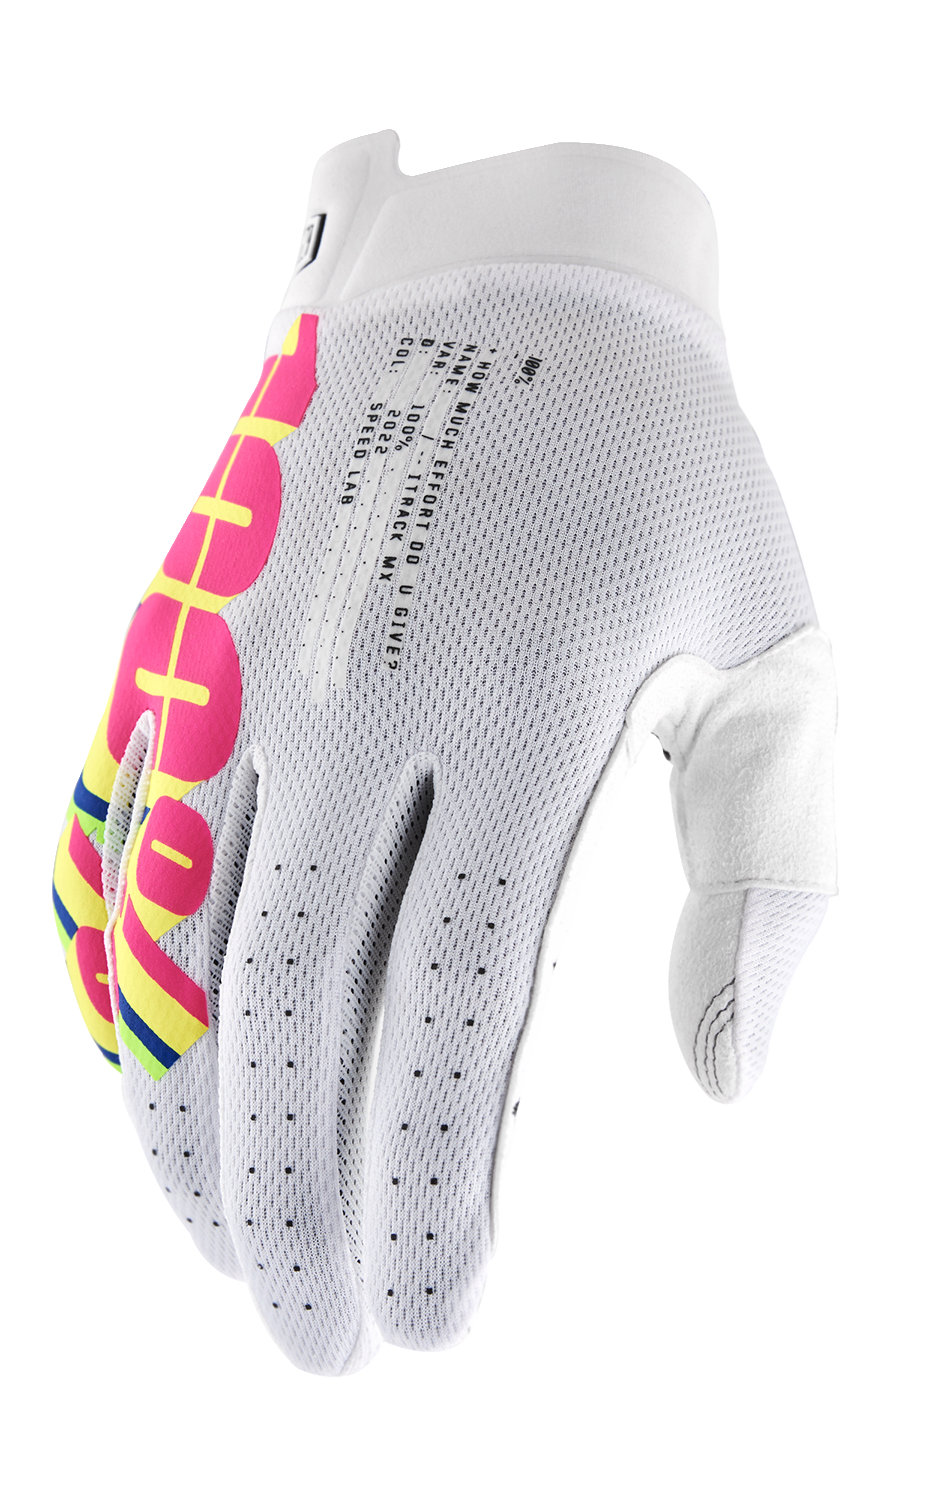 100% iTrack Gloves - System White - XL 10008-00043